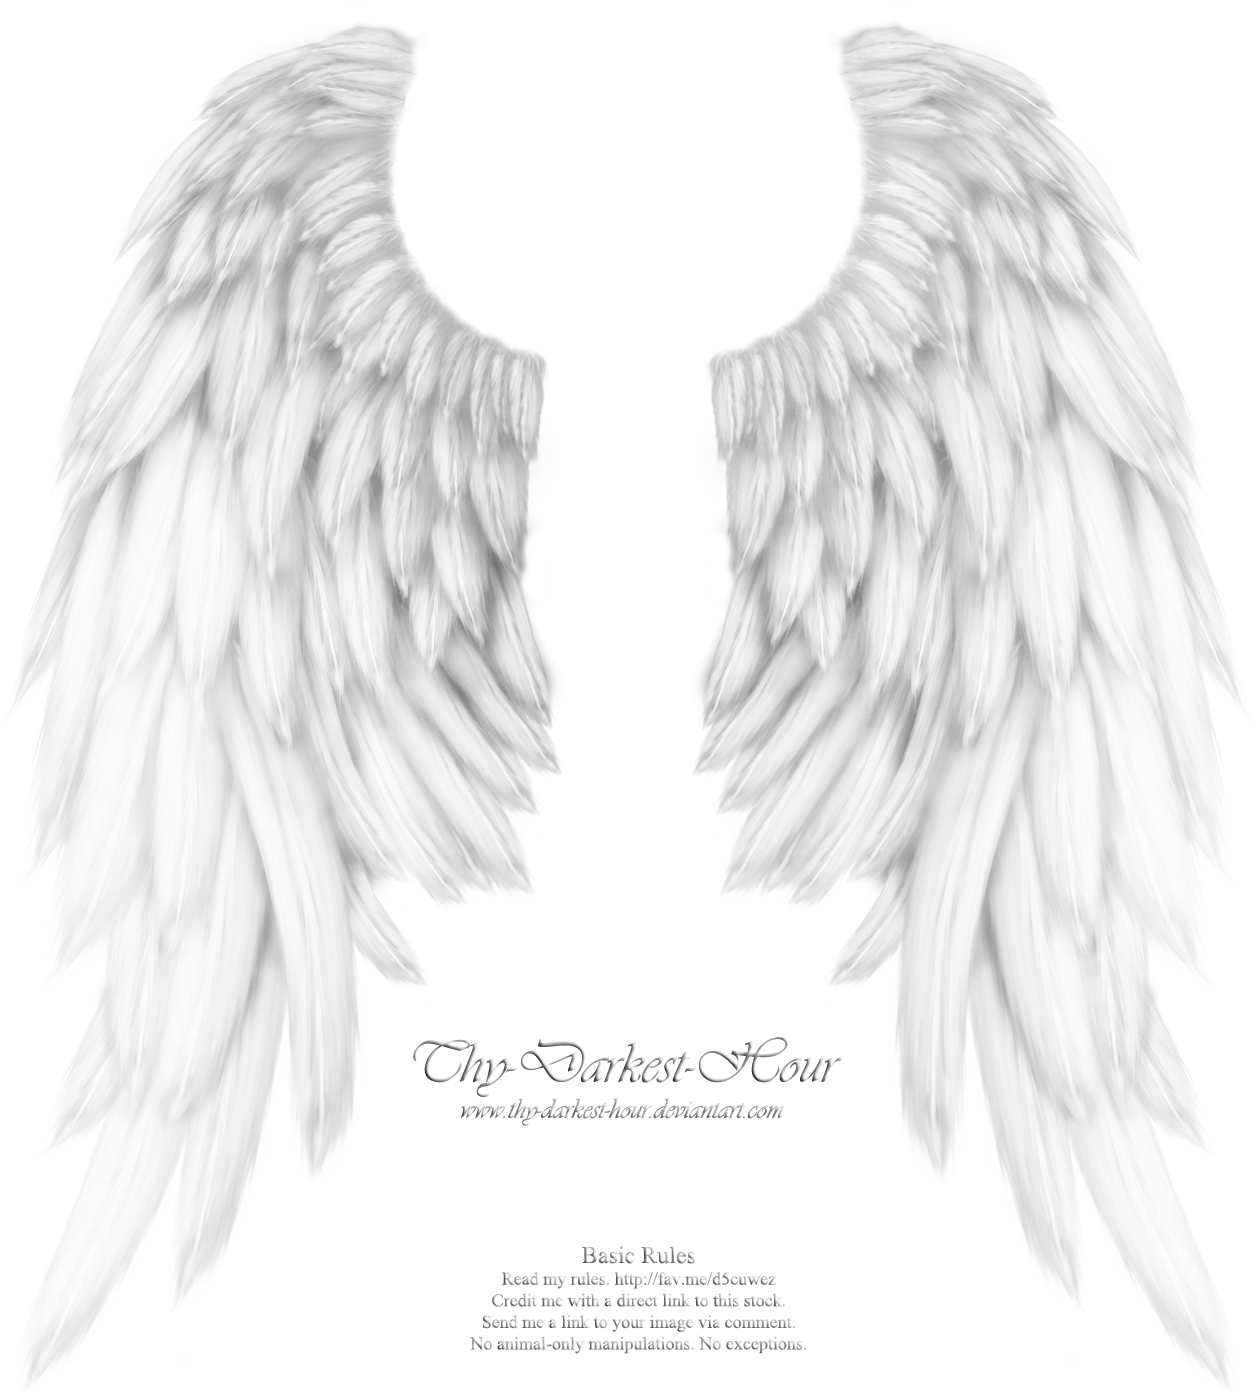 Realistic Angel Wings